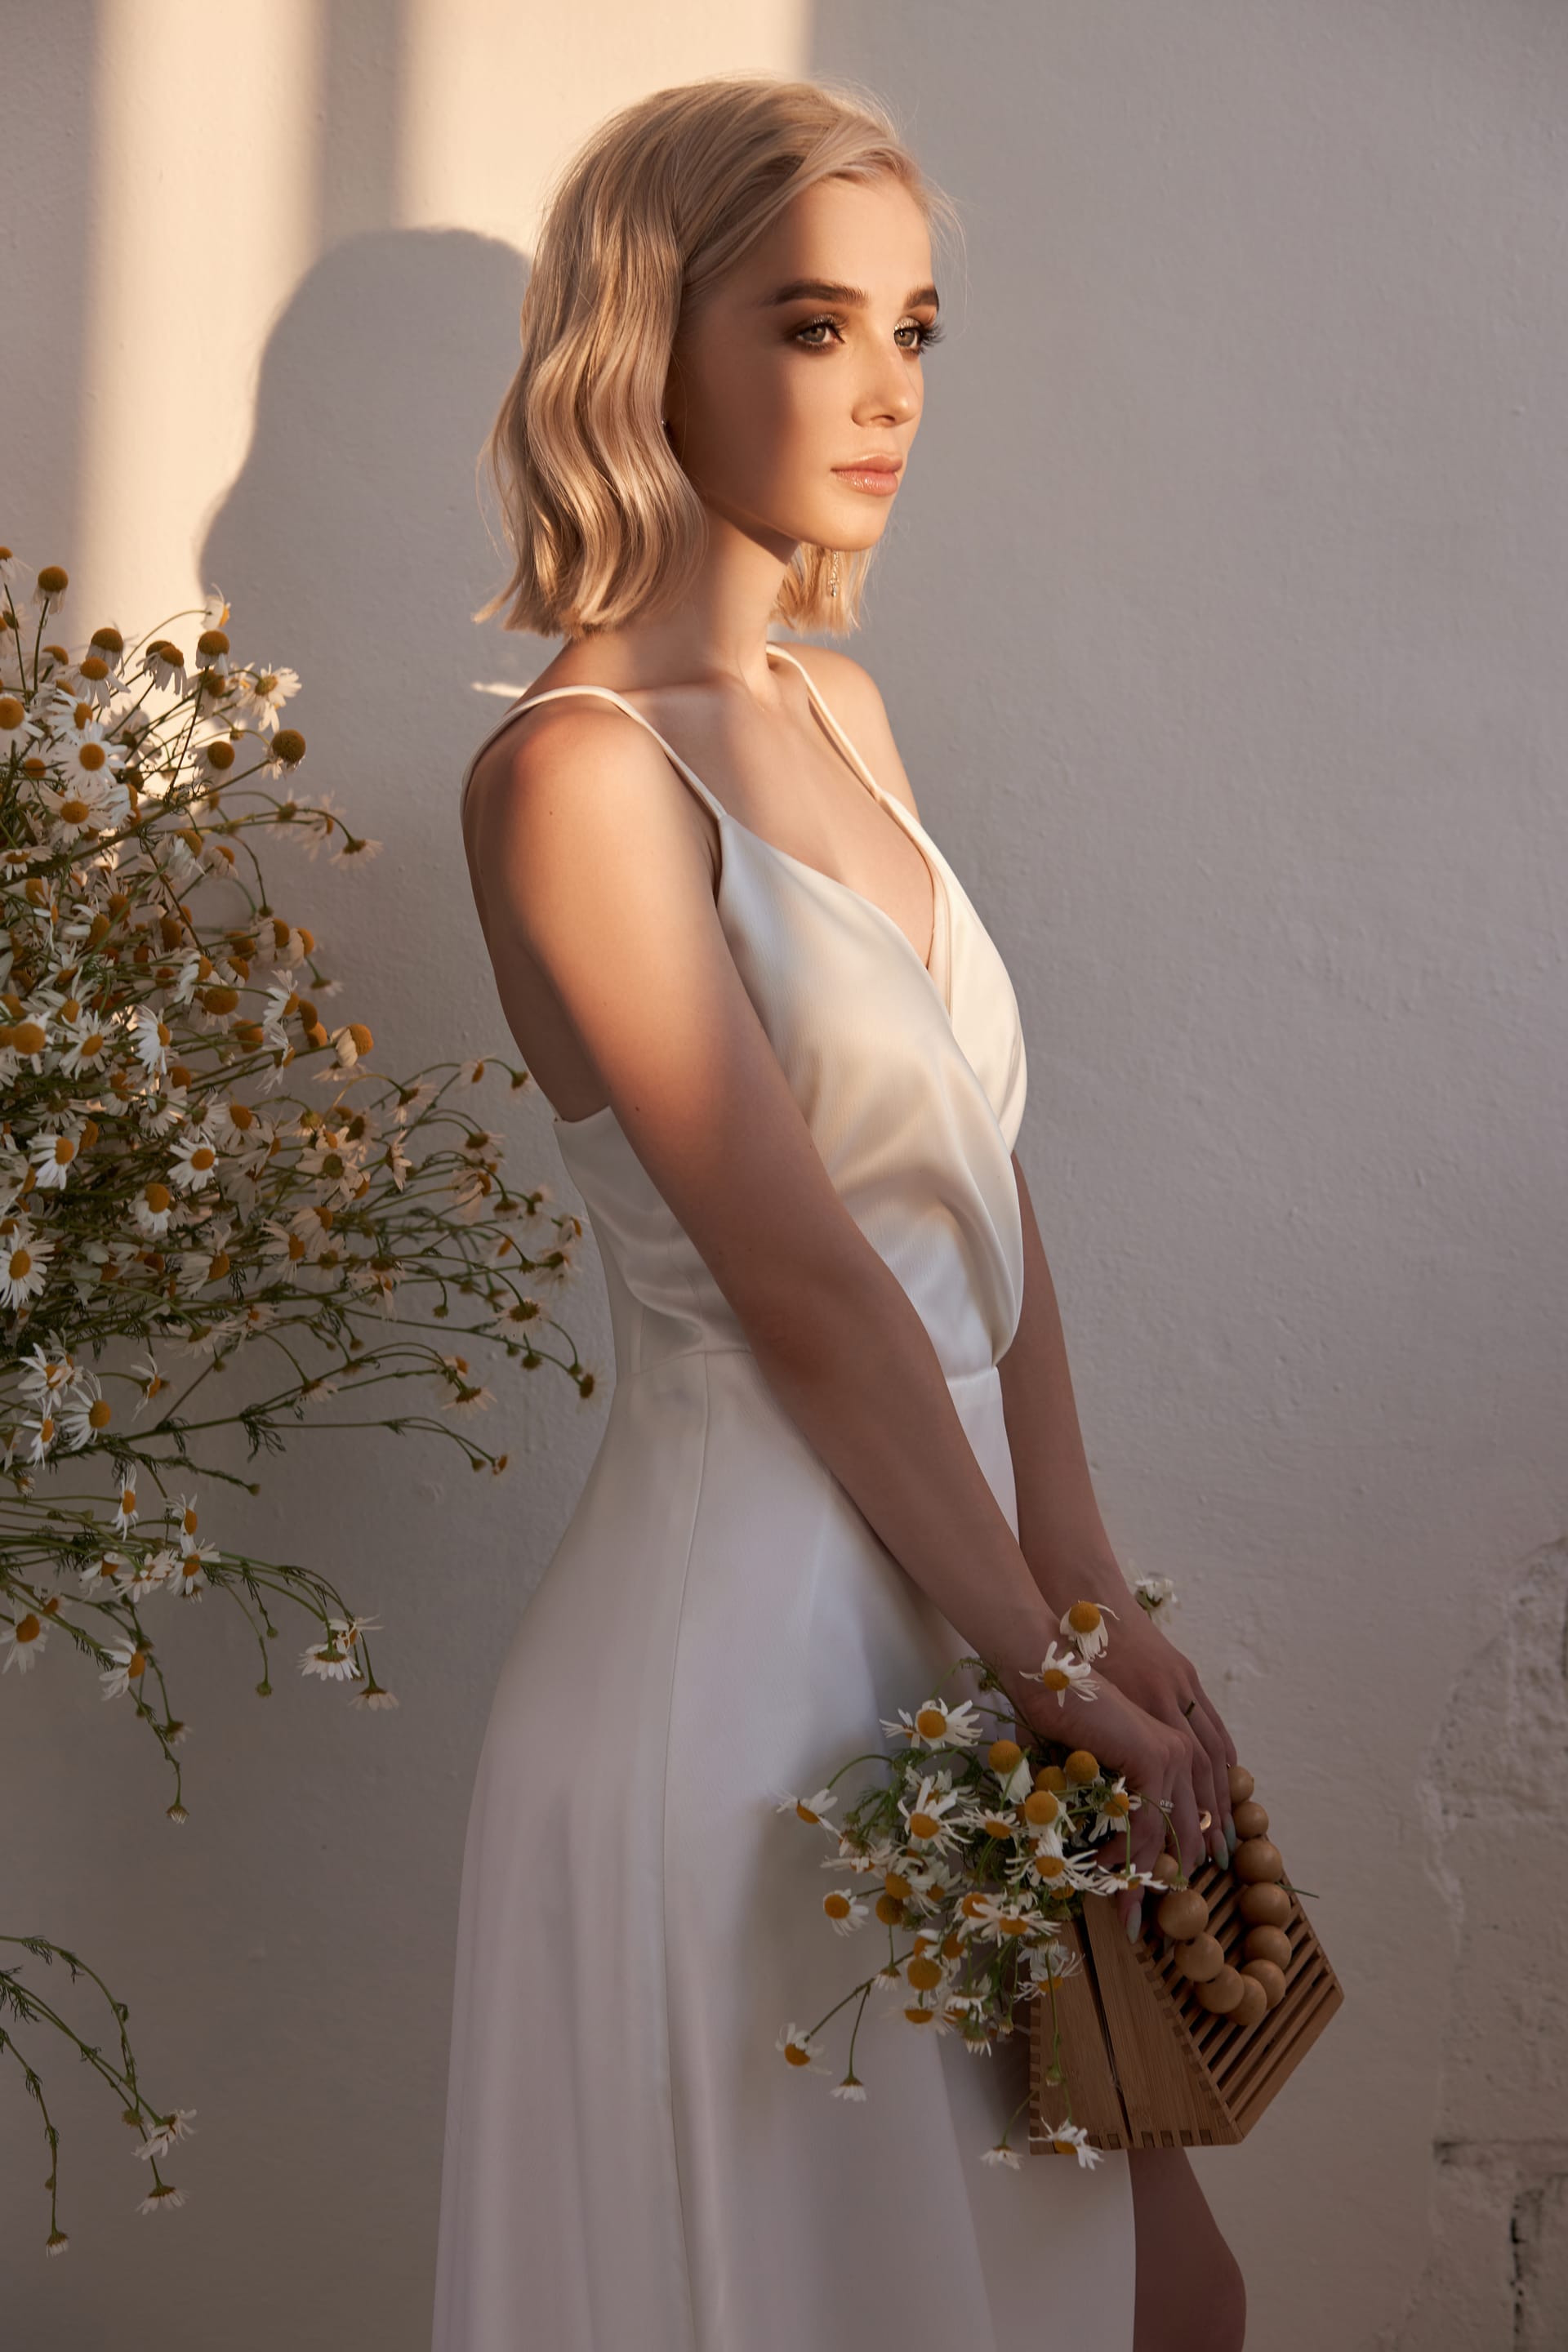 Blonde woman white wedding dress evening sun image